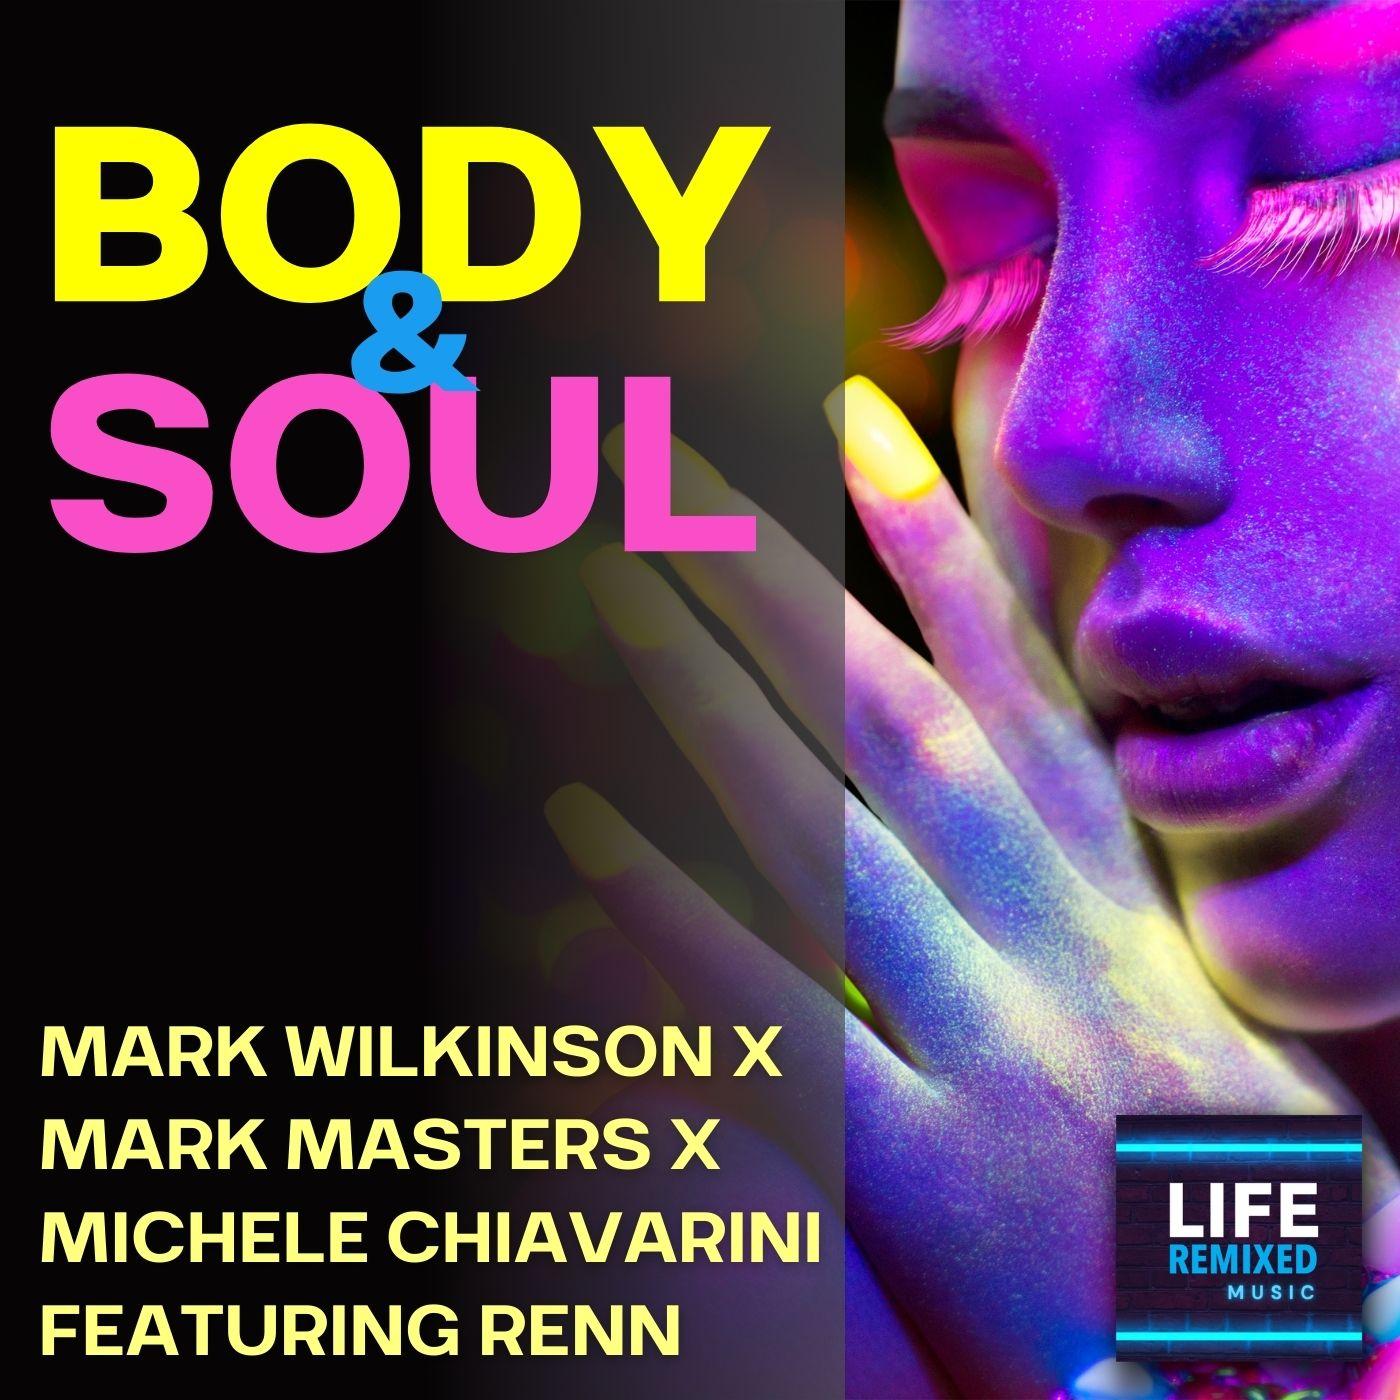 Mark Wilkinson, Mark Masters, Michele Chiavarini feat. Renn âBody & Soulâ Life Remixed Music